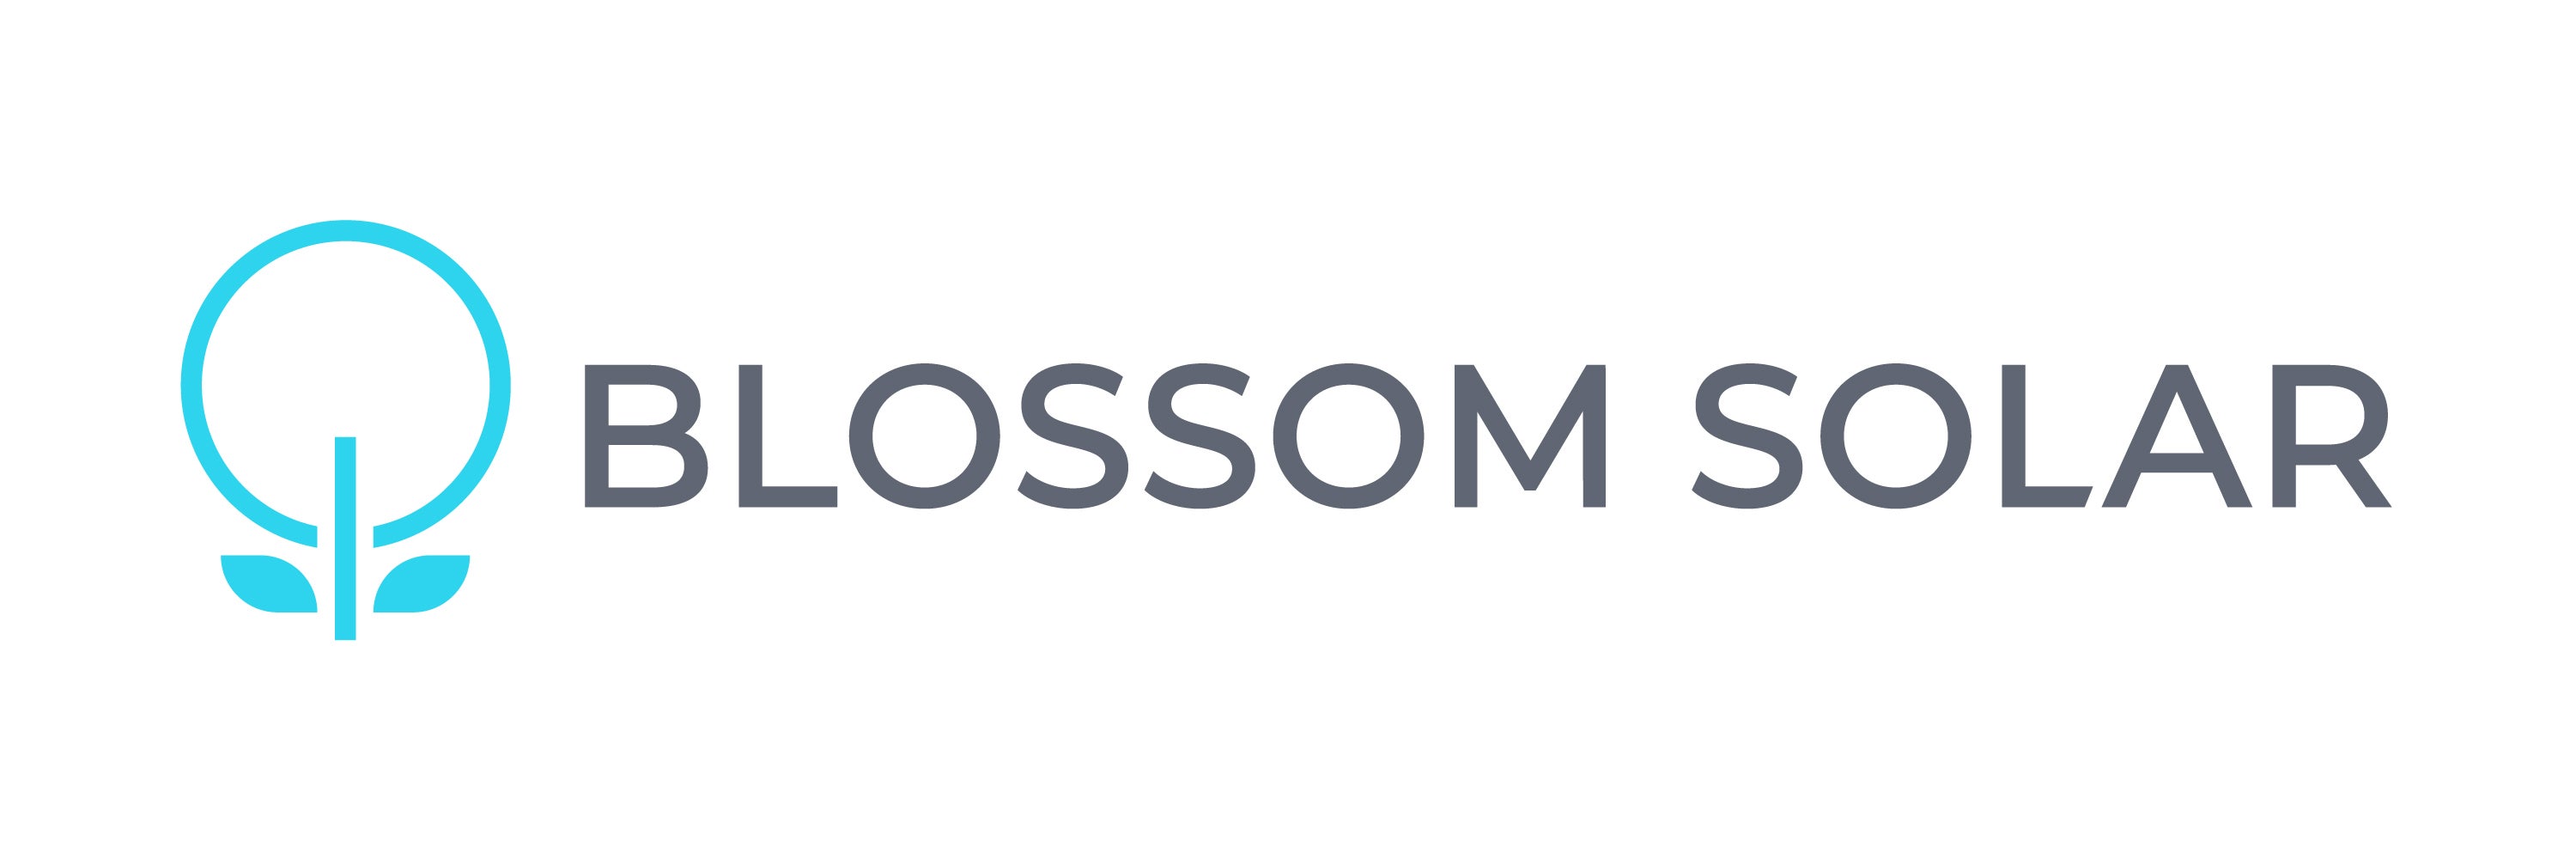 Blossom Solar logo